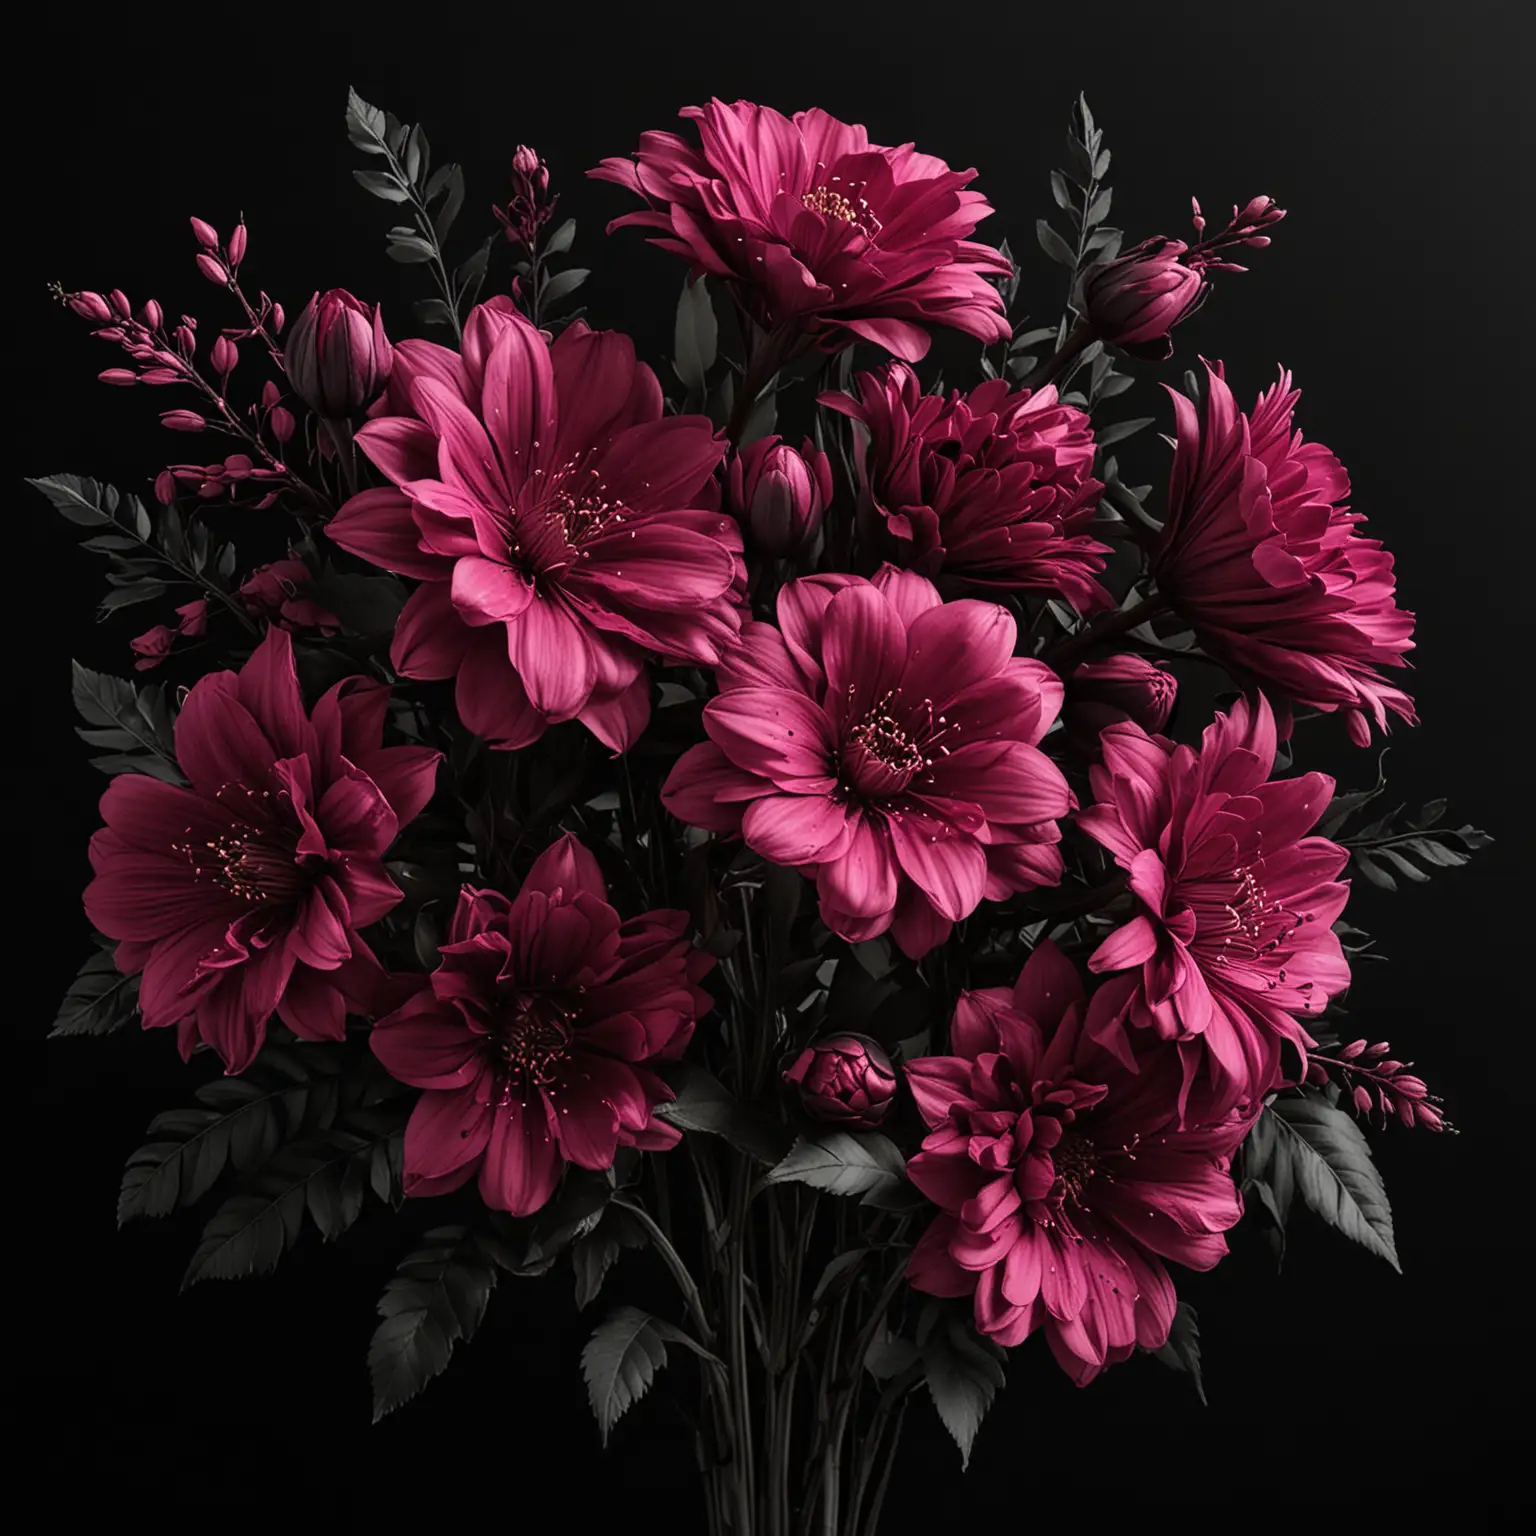 Vibrant Magenta Flower Bouquet Outlines on Black Background